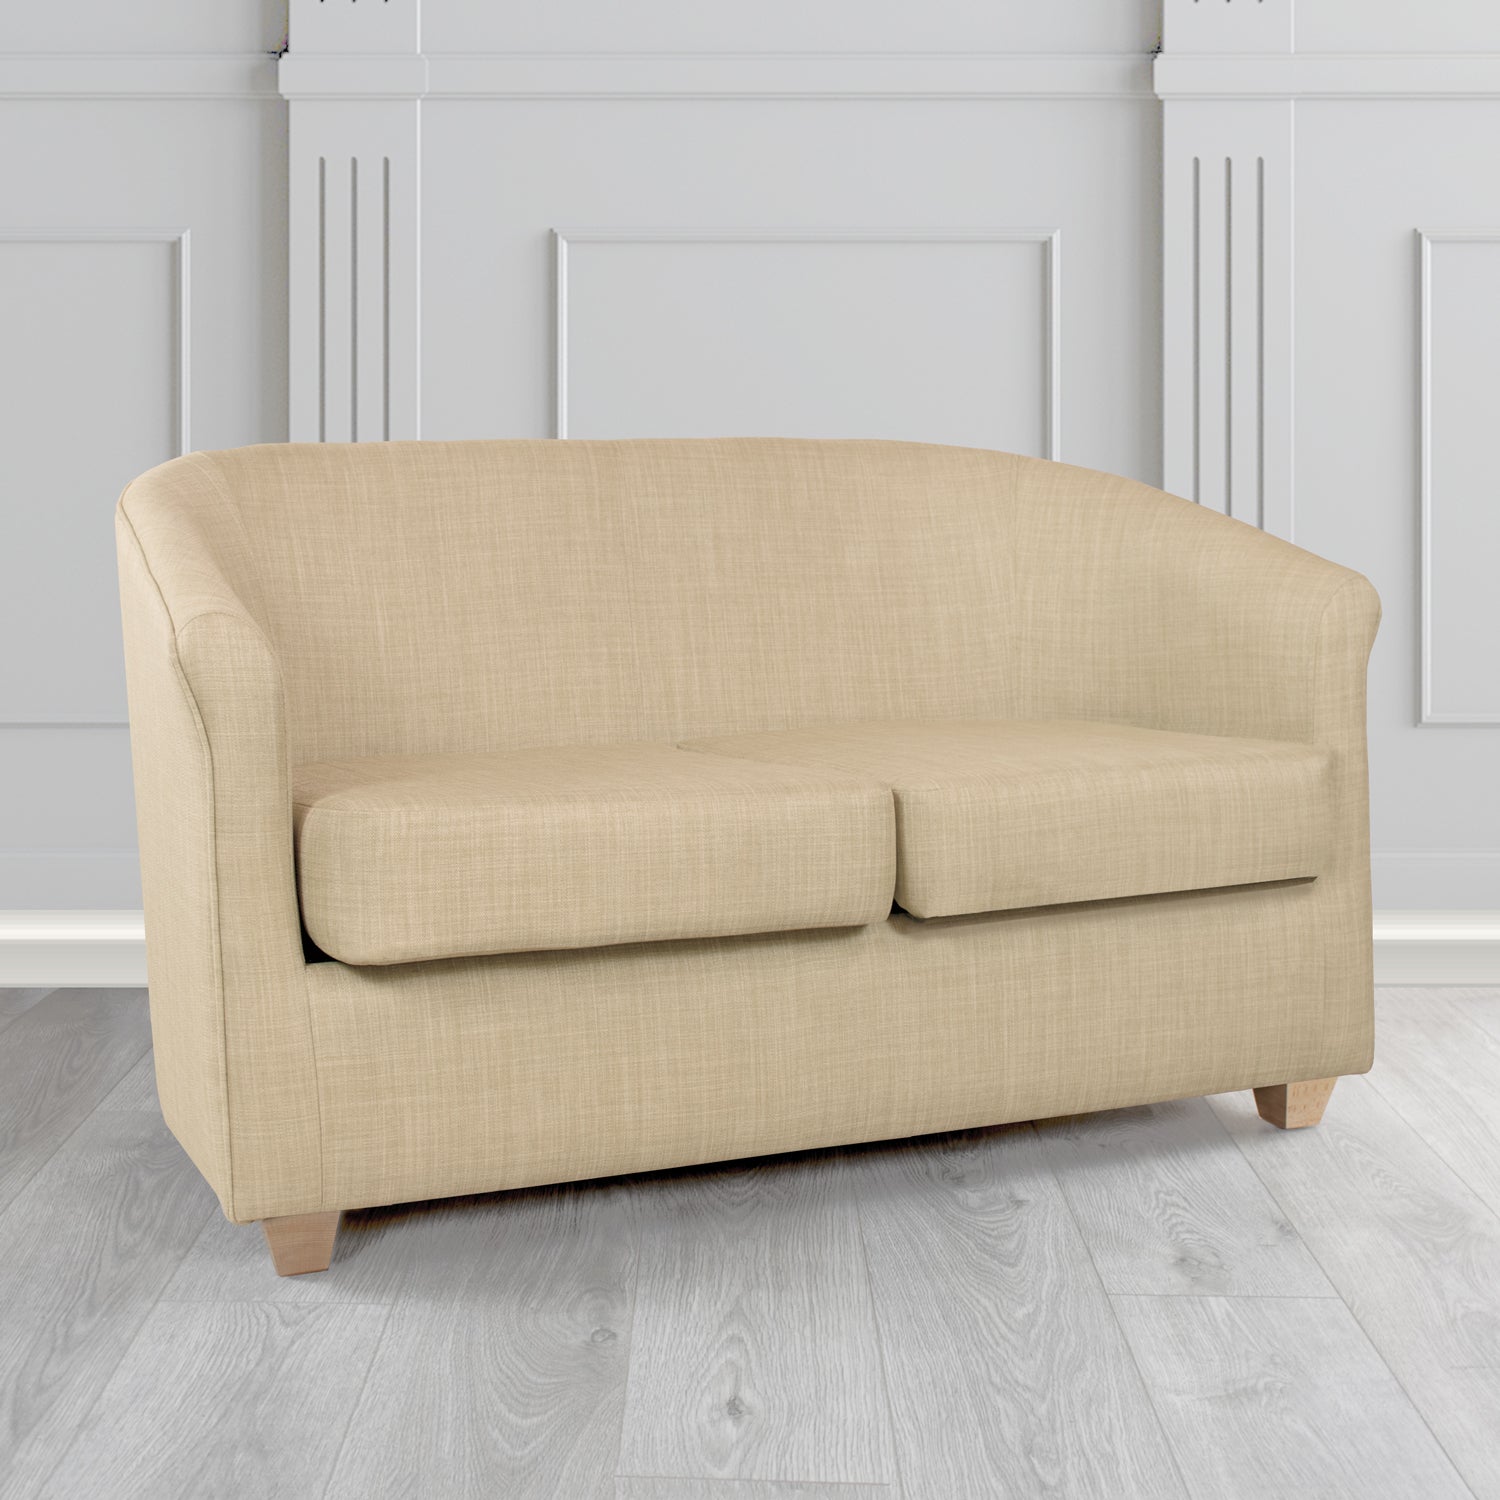 Cannes Charles Sand Linen Fabric 2 Seater Tub Sofa - The Tub Chair Shop